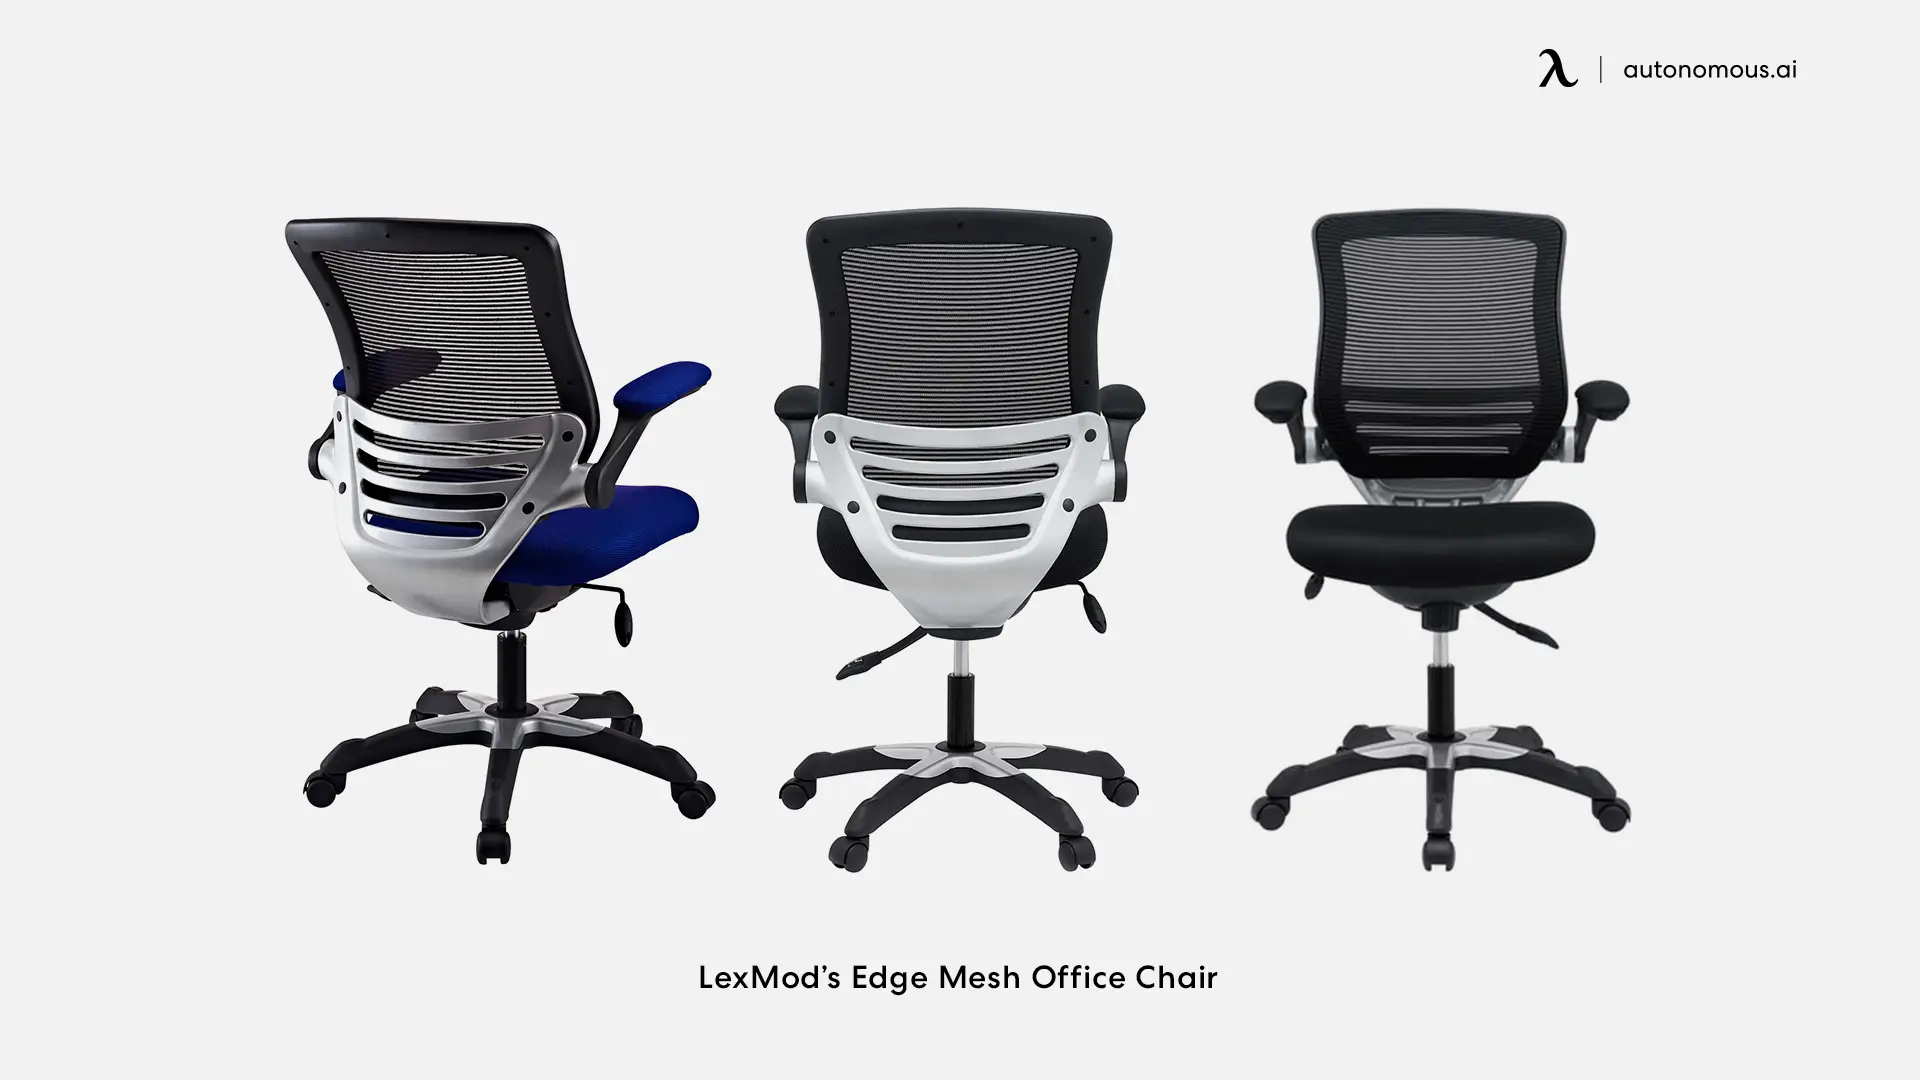 LexMod’s Edge Mesh Office Chair